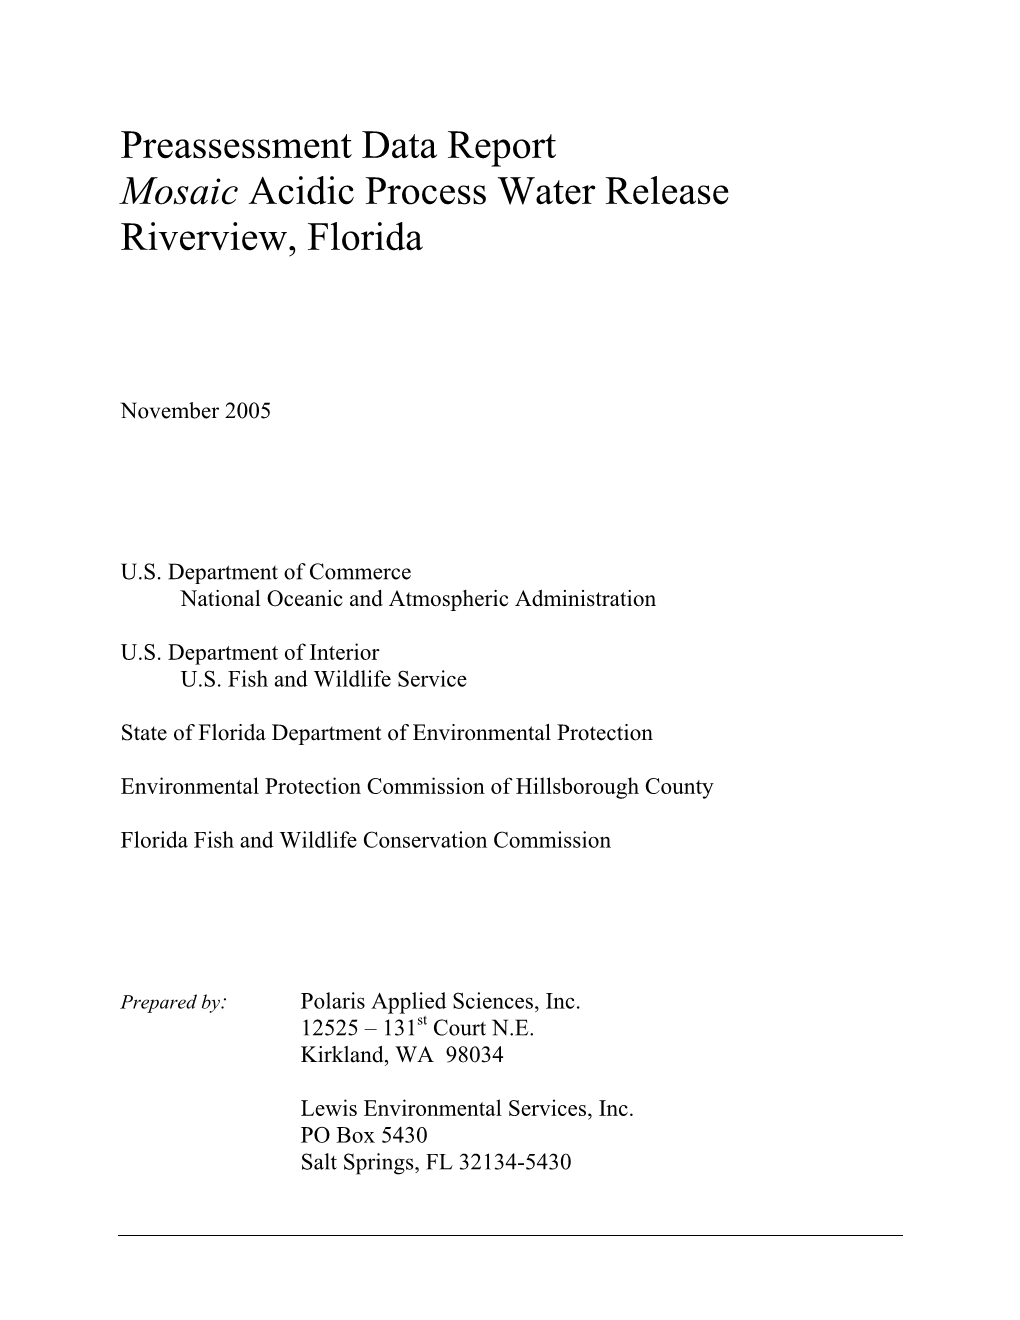 Preassessment Data Report Mosaic Acidic Process Water Release Riverview, Florida